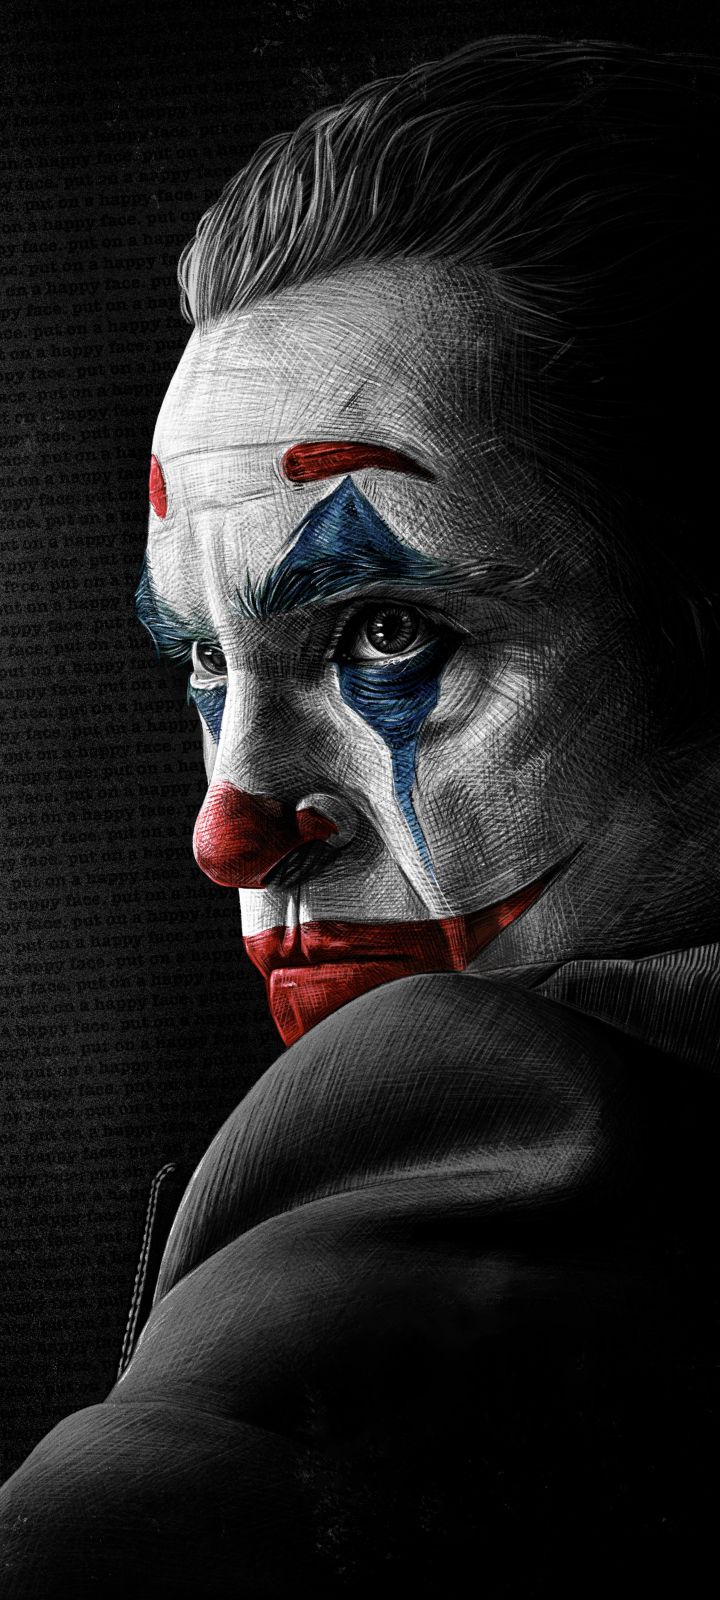 4k Joaquin Phoenix As Joker 720x1600 Resolution Wallpaper, HD Artist 4K Wallpaper, Image, Photo and Background